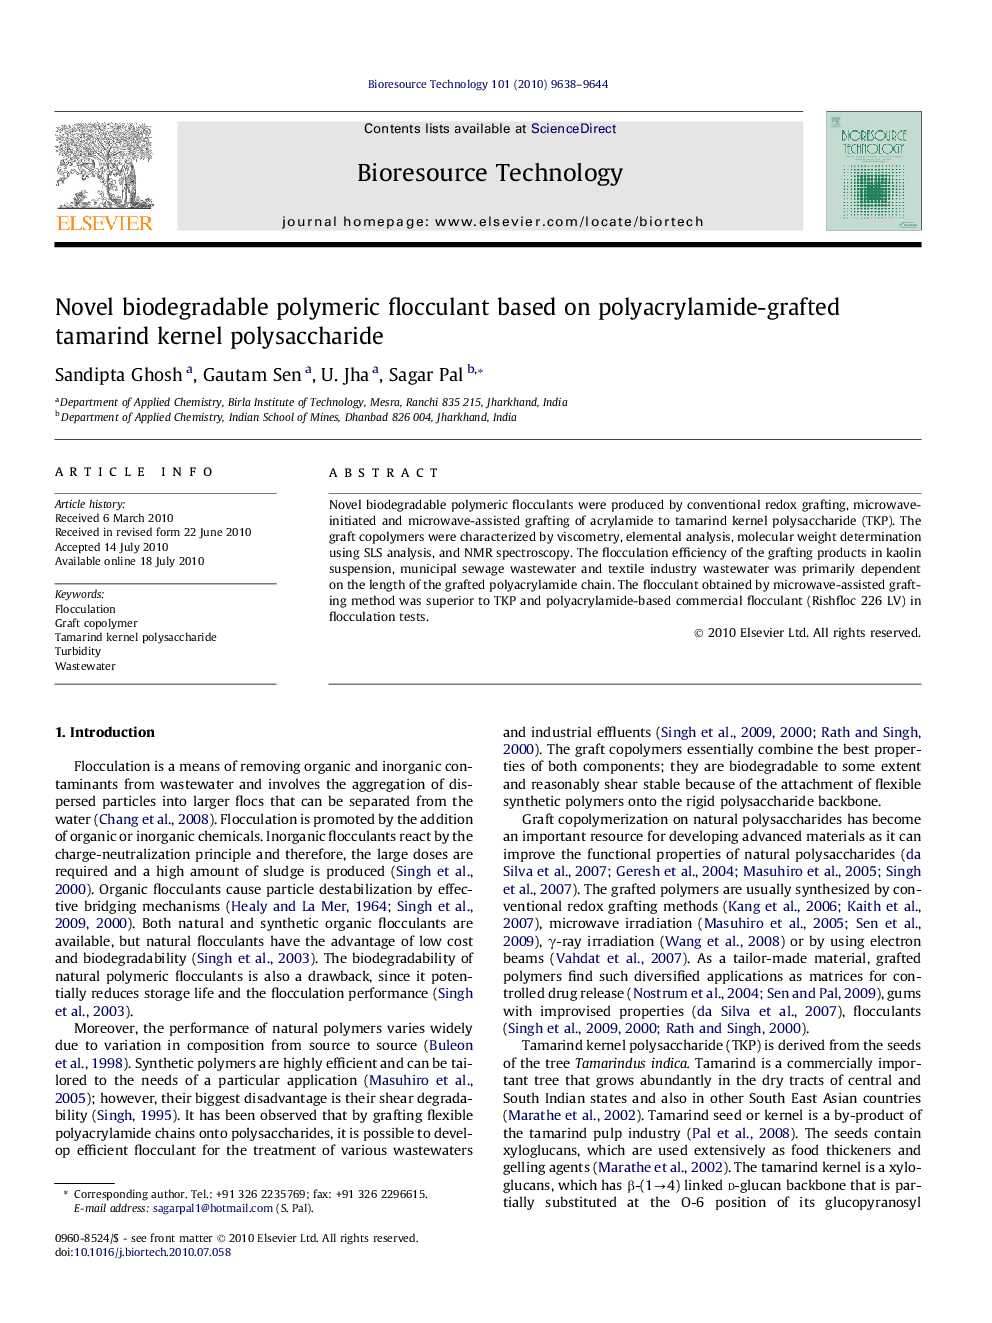 Novel biodegradable polymeric flocculant based on polyacrylamide-grafted tamarind kernel polysaccharide